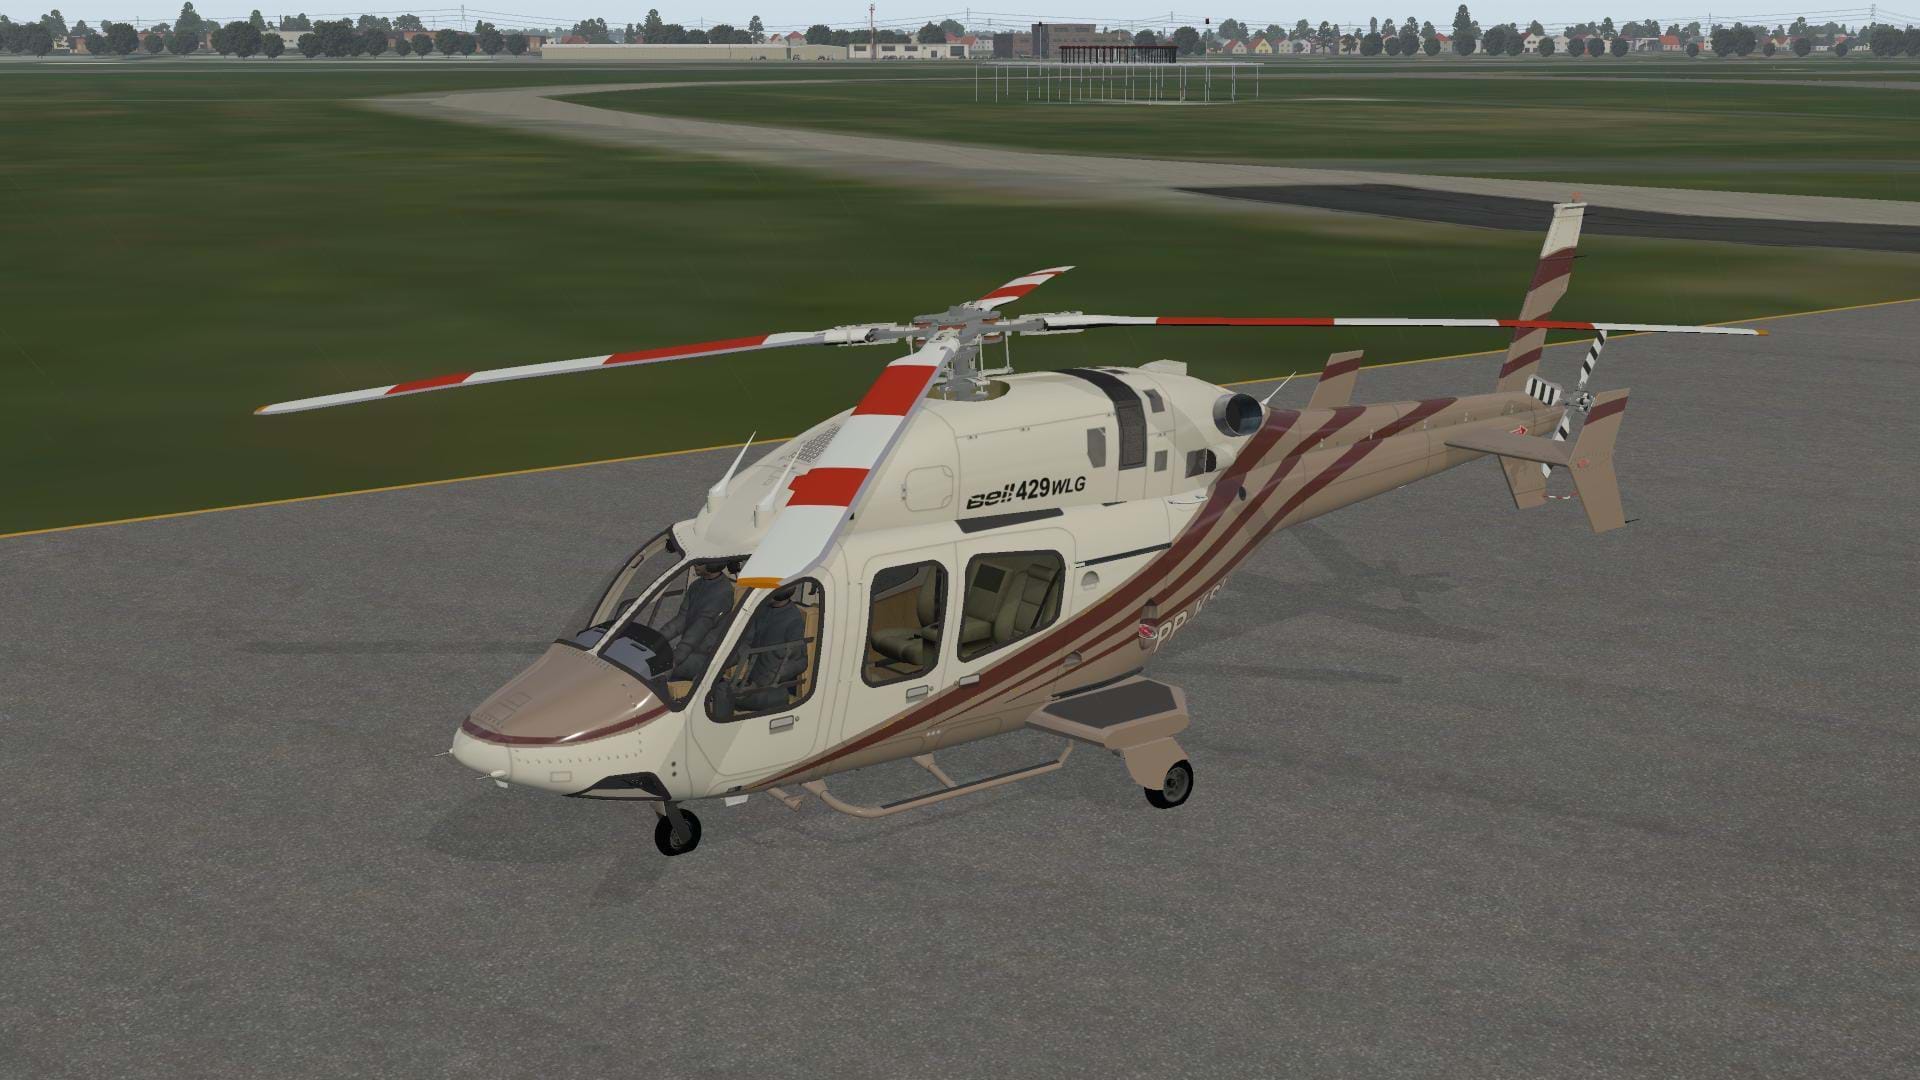 Bell 429 WLG